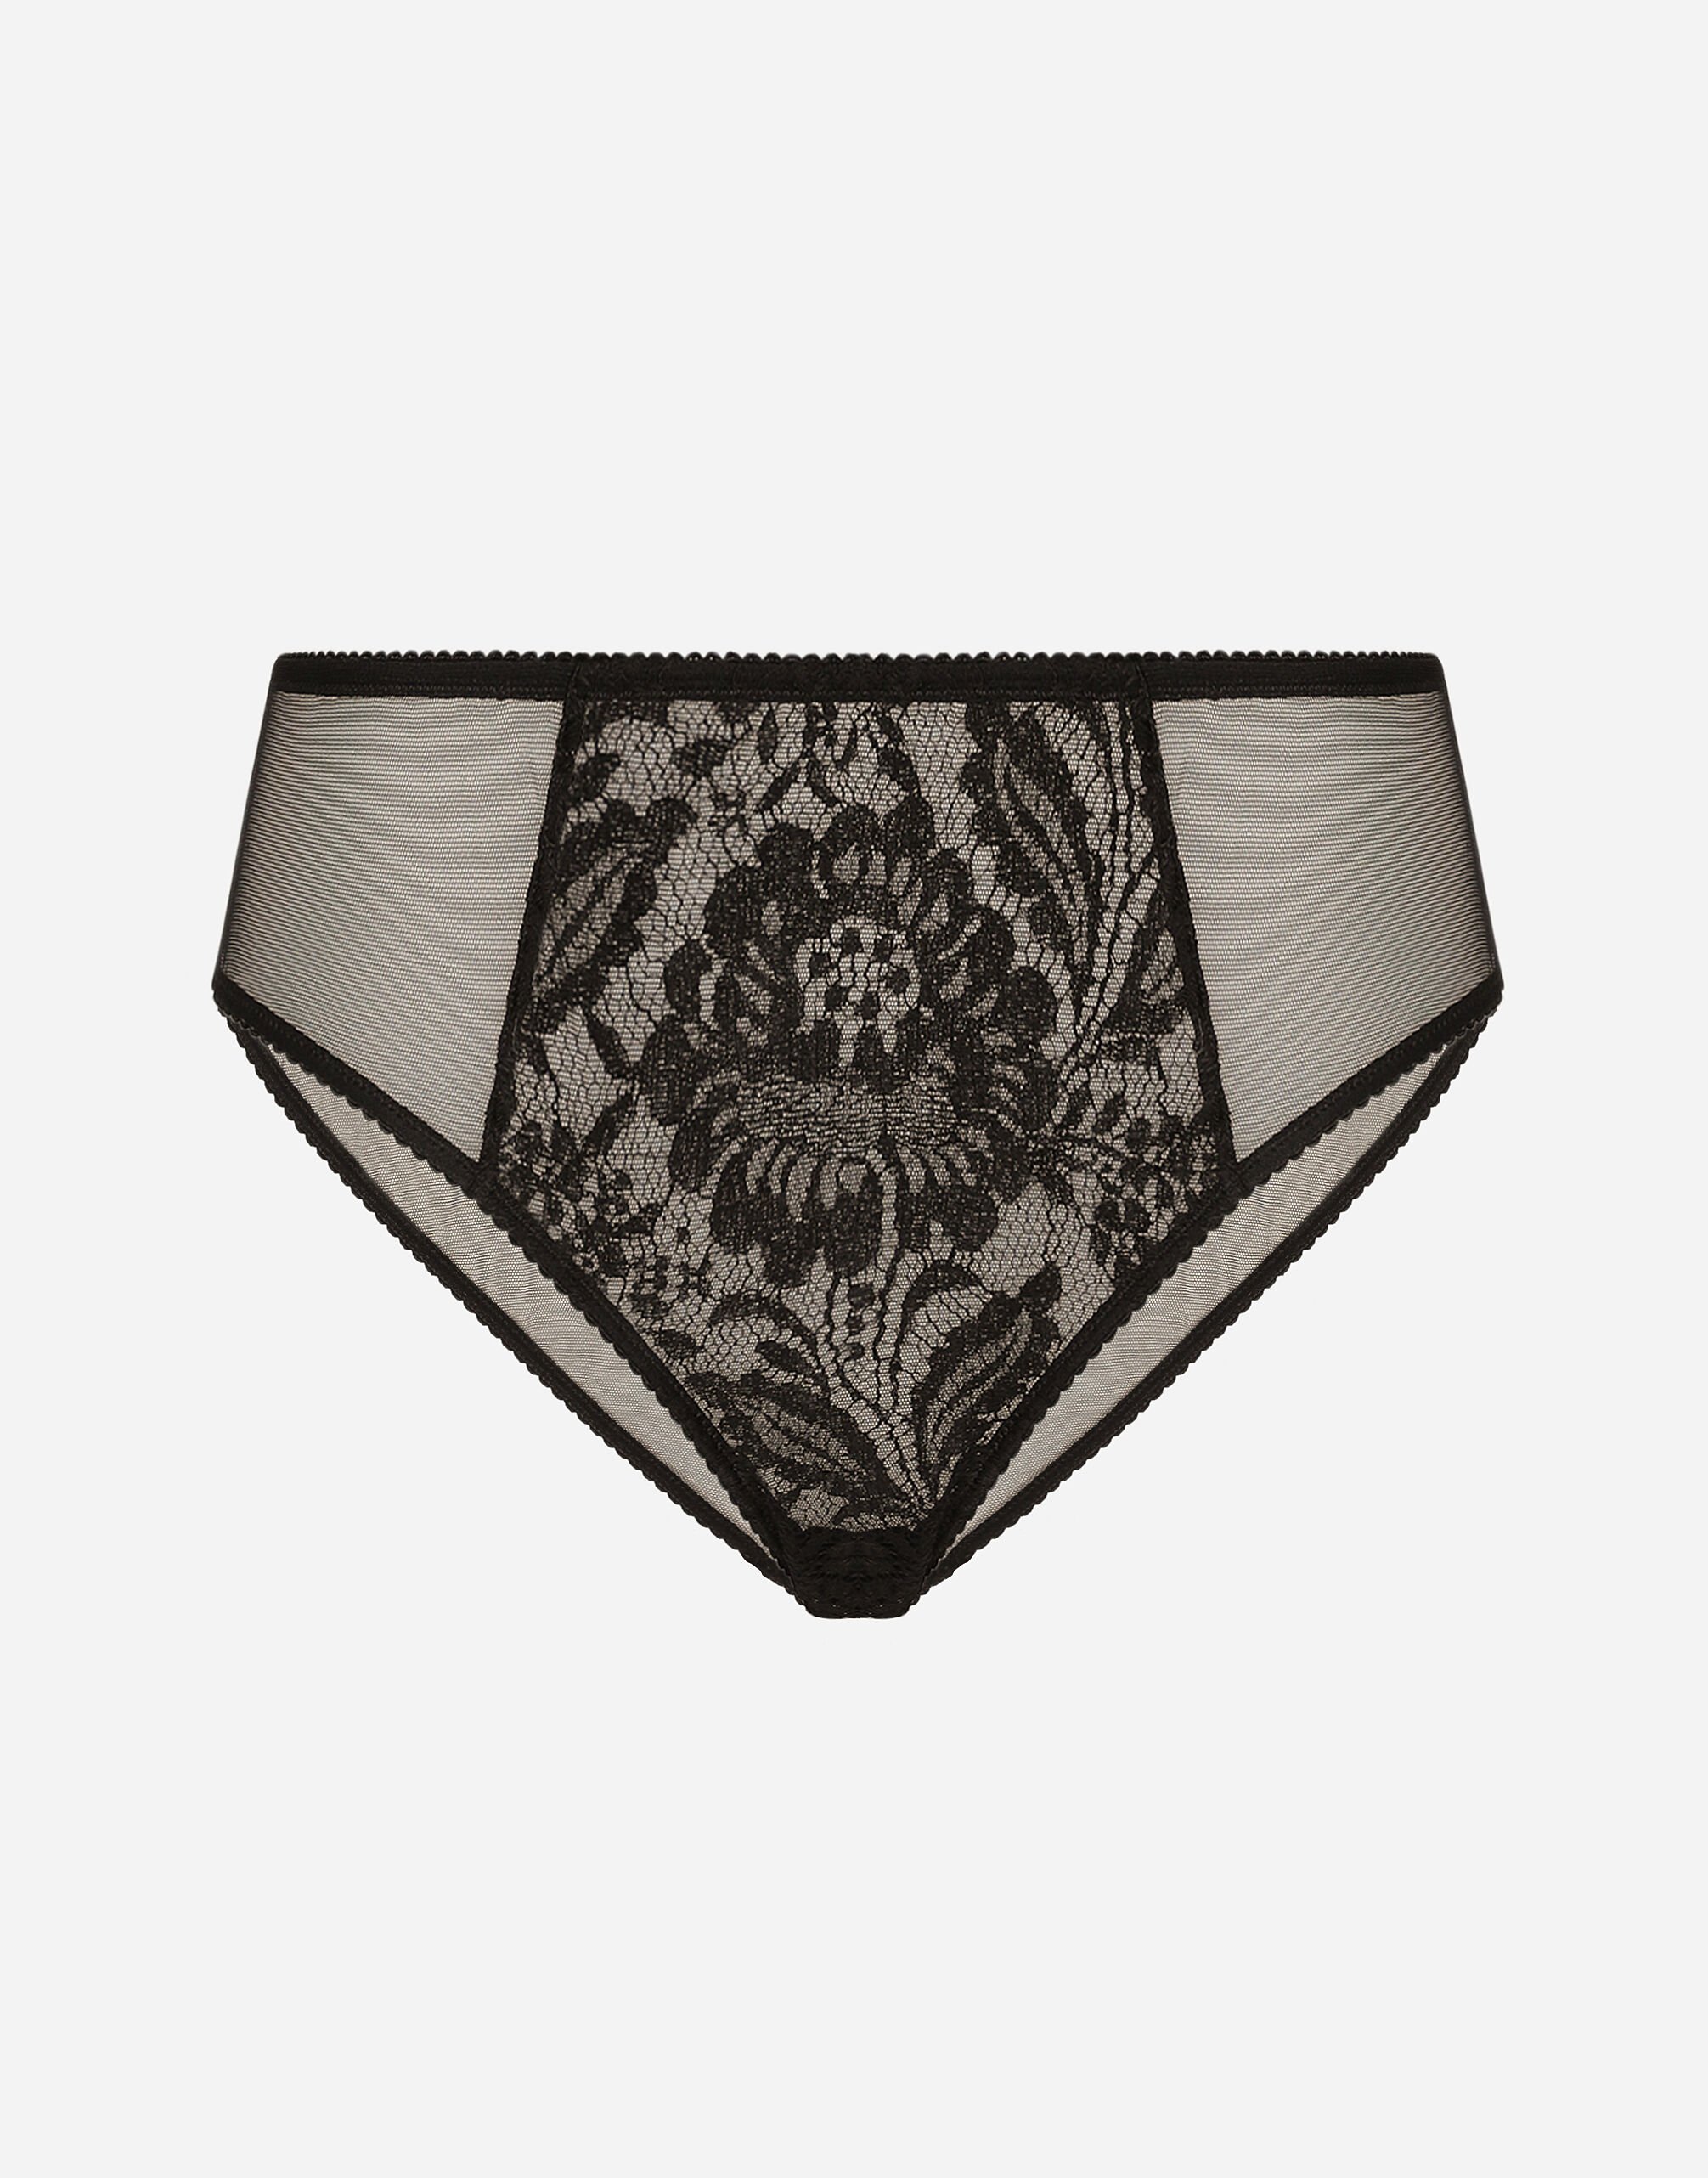 Dolce&Gabbana® Women's Underwear : luxury lingerie | D&G ®